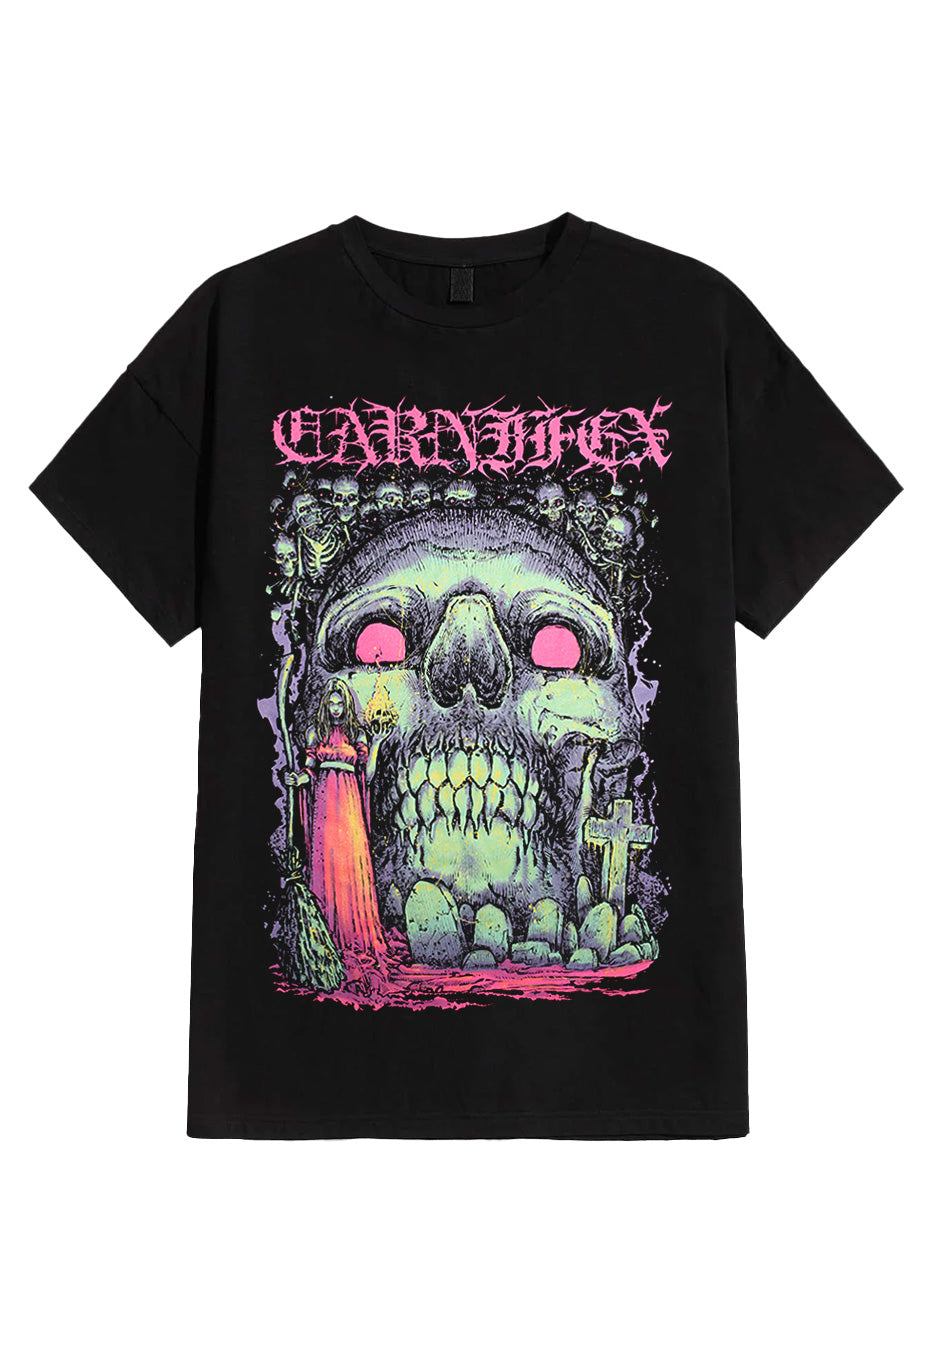 Carnifex - Witch Queen - T-Shirt